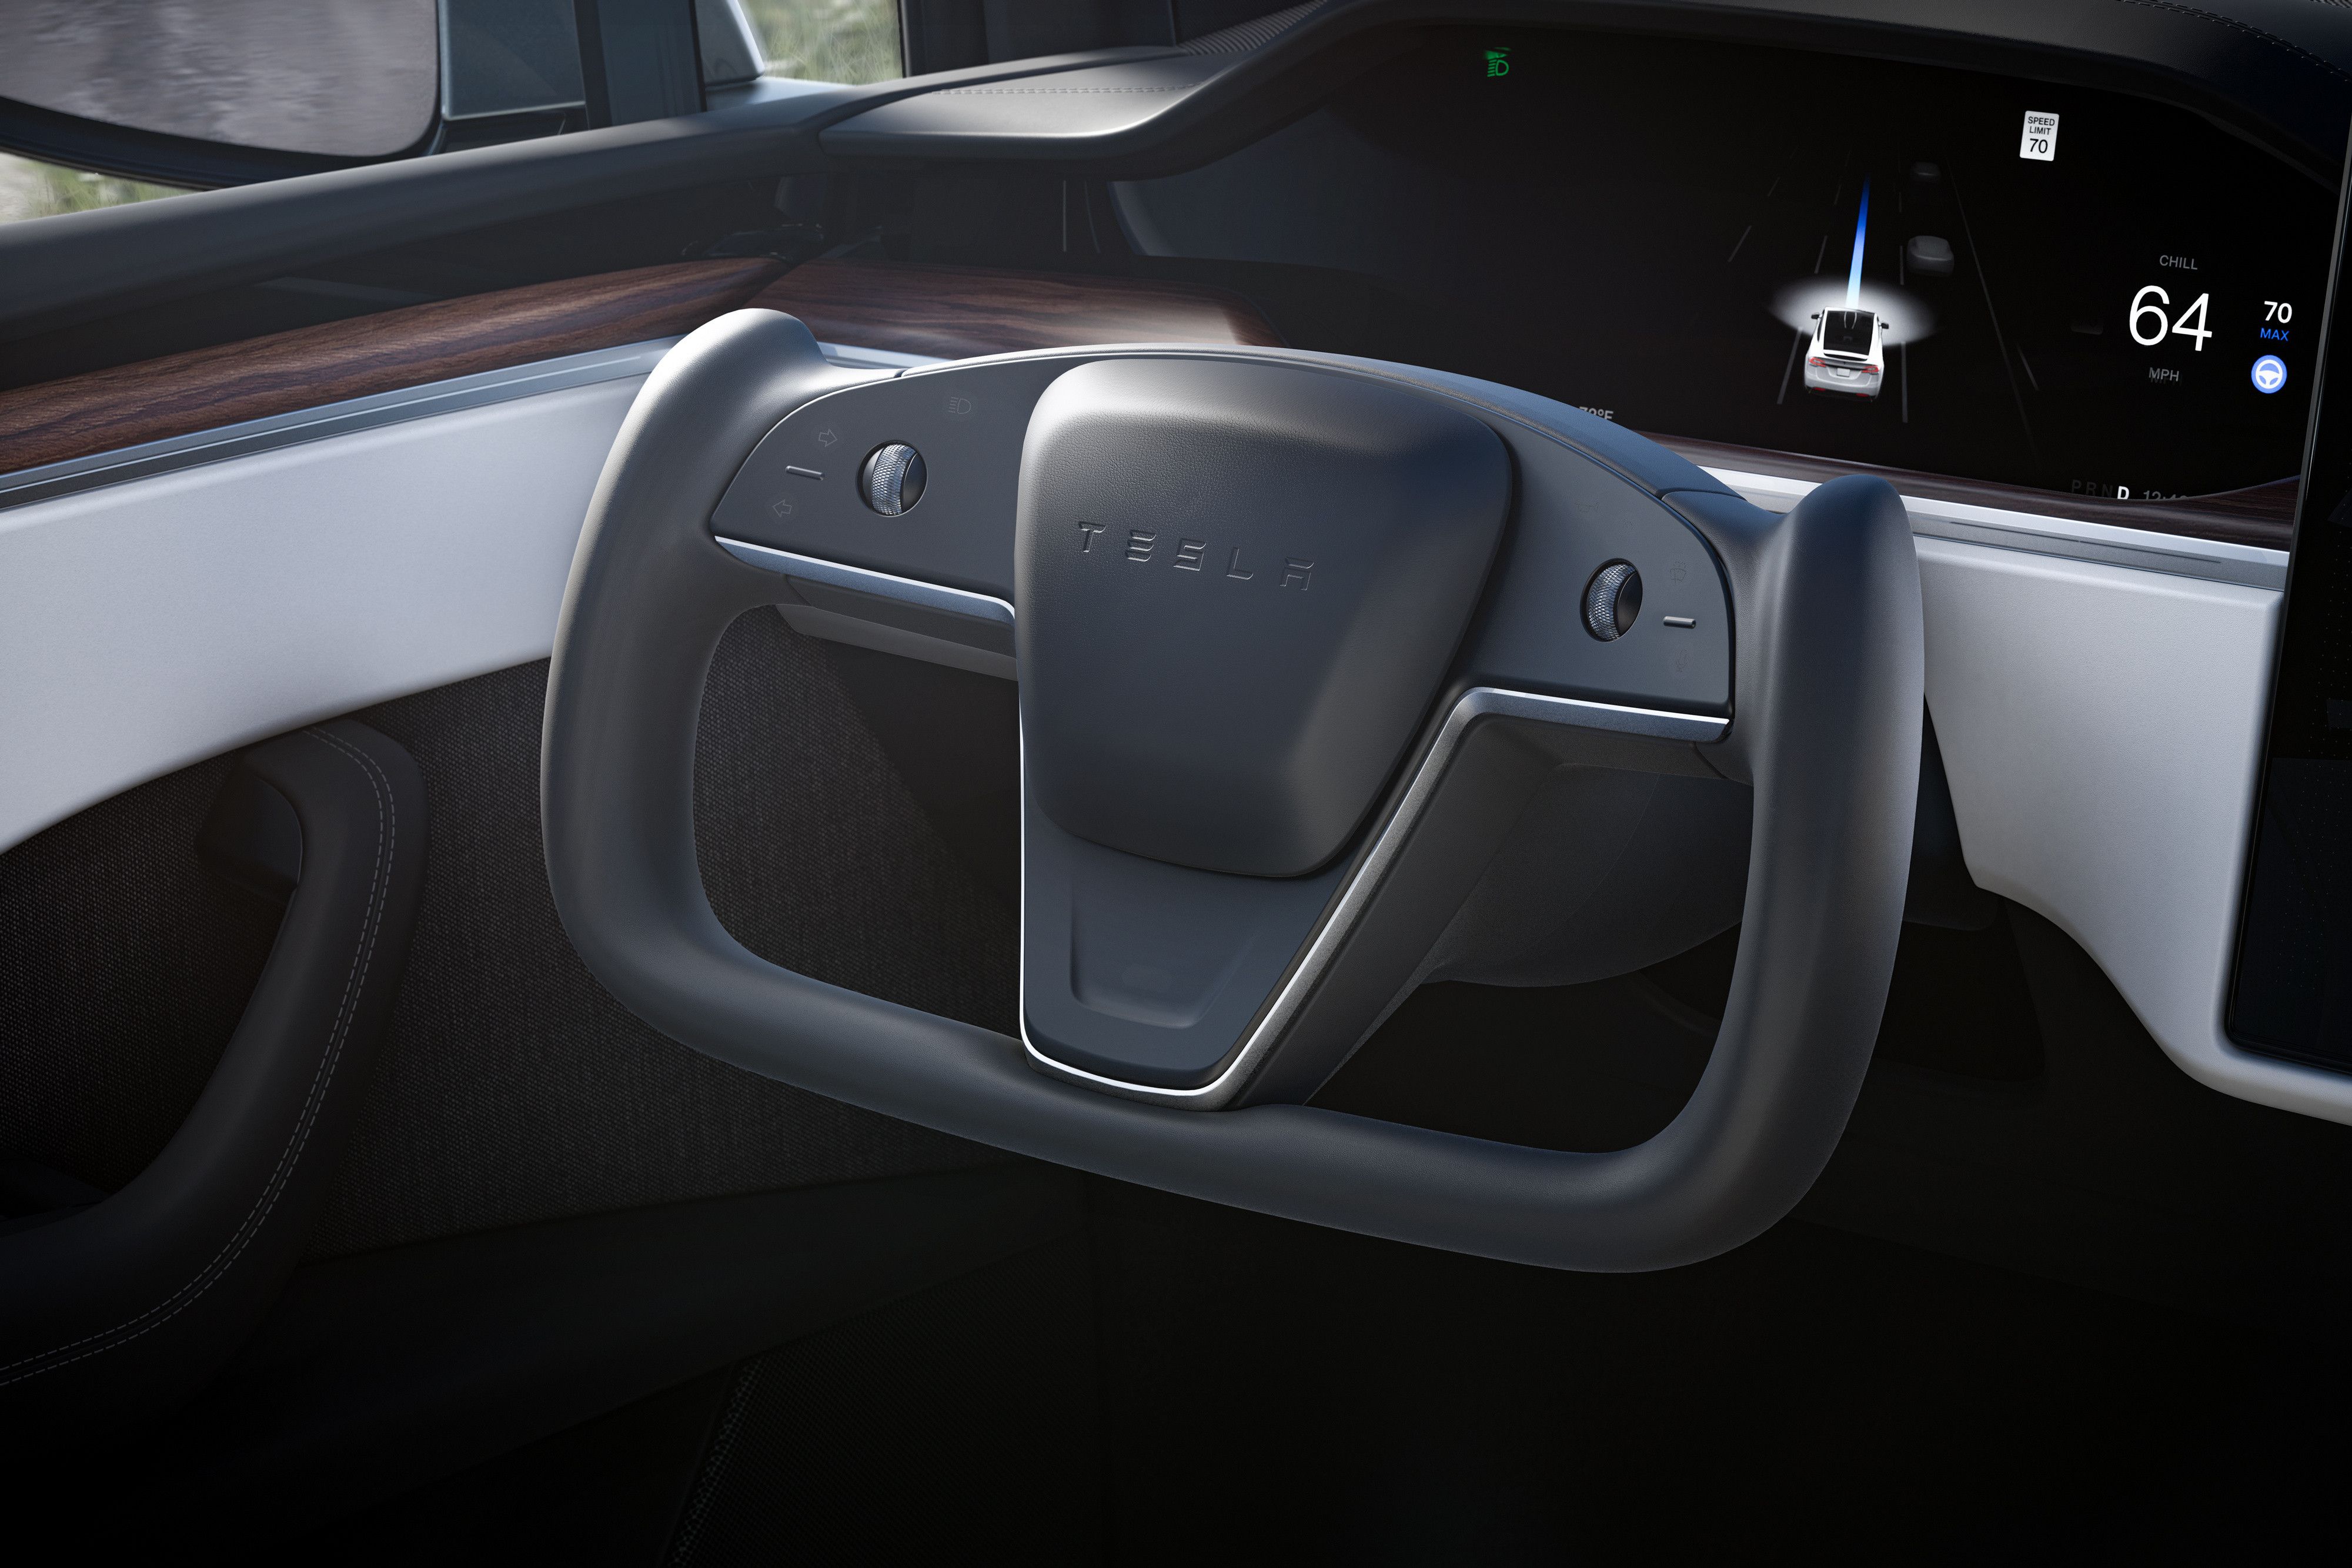 Tesla Model X Adaptive Cruise Control, Auto Steering & Auto Pilot, Manual,  Tutorial 